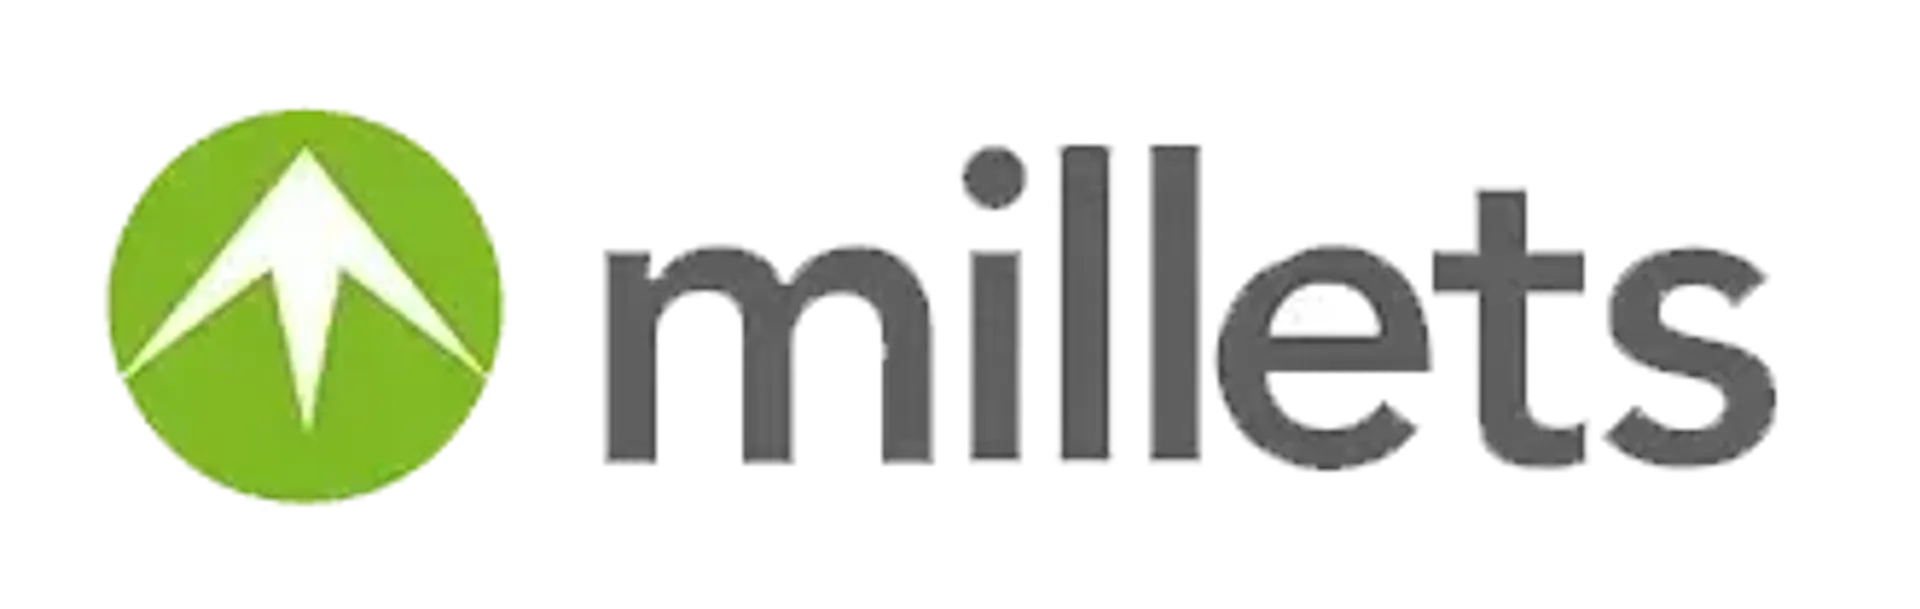 MILLETS logo. Current catalogue